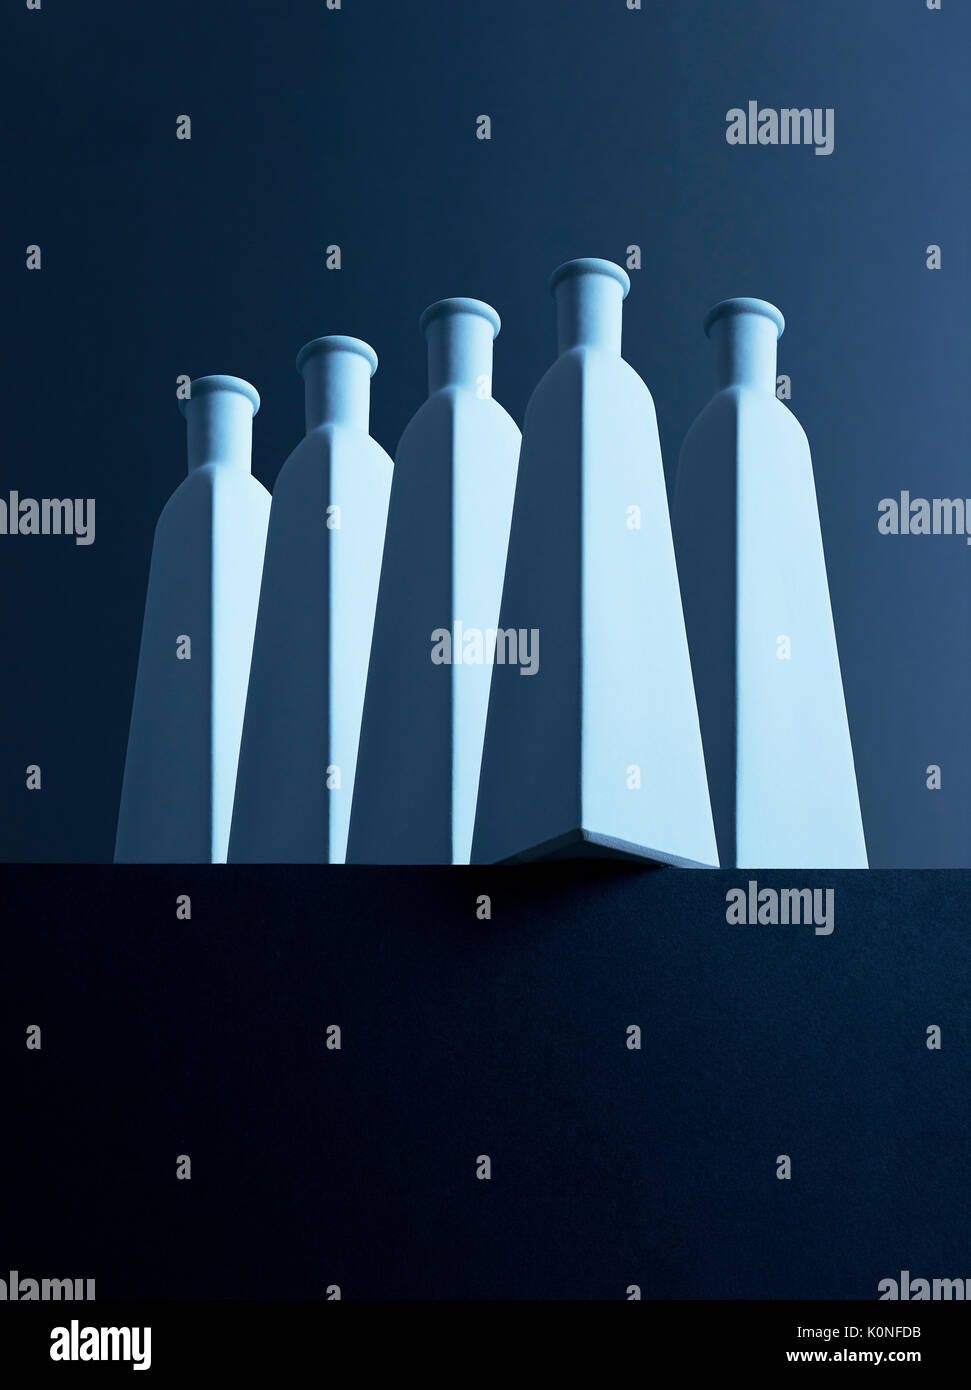 Multiple bottles organized neatly over a dark background Stock Photo